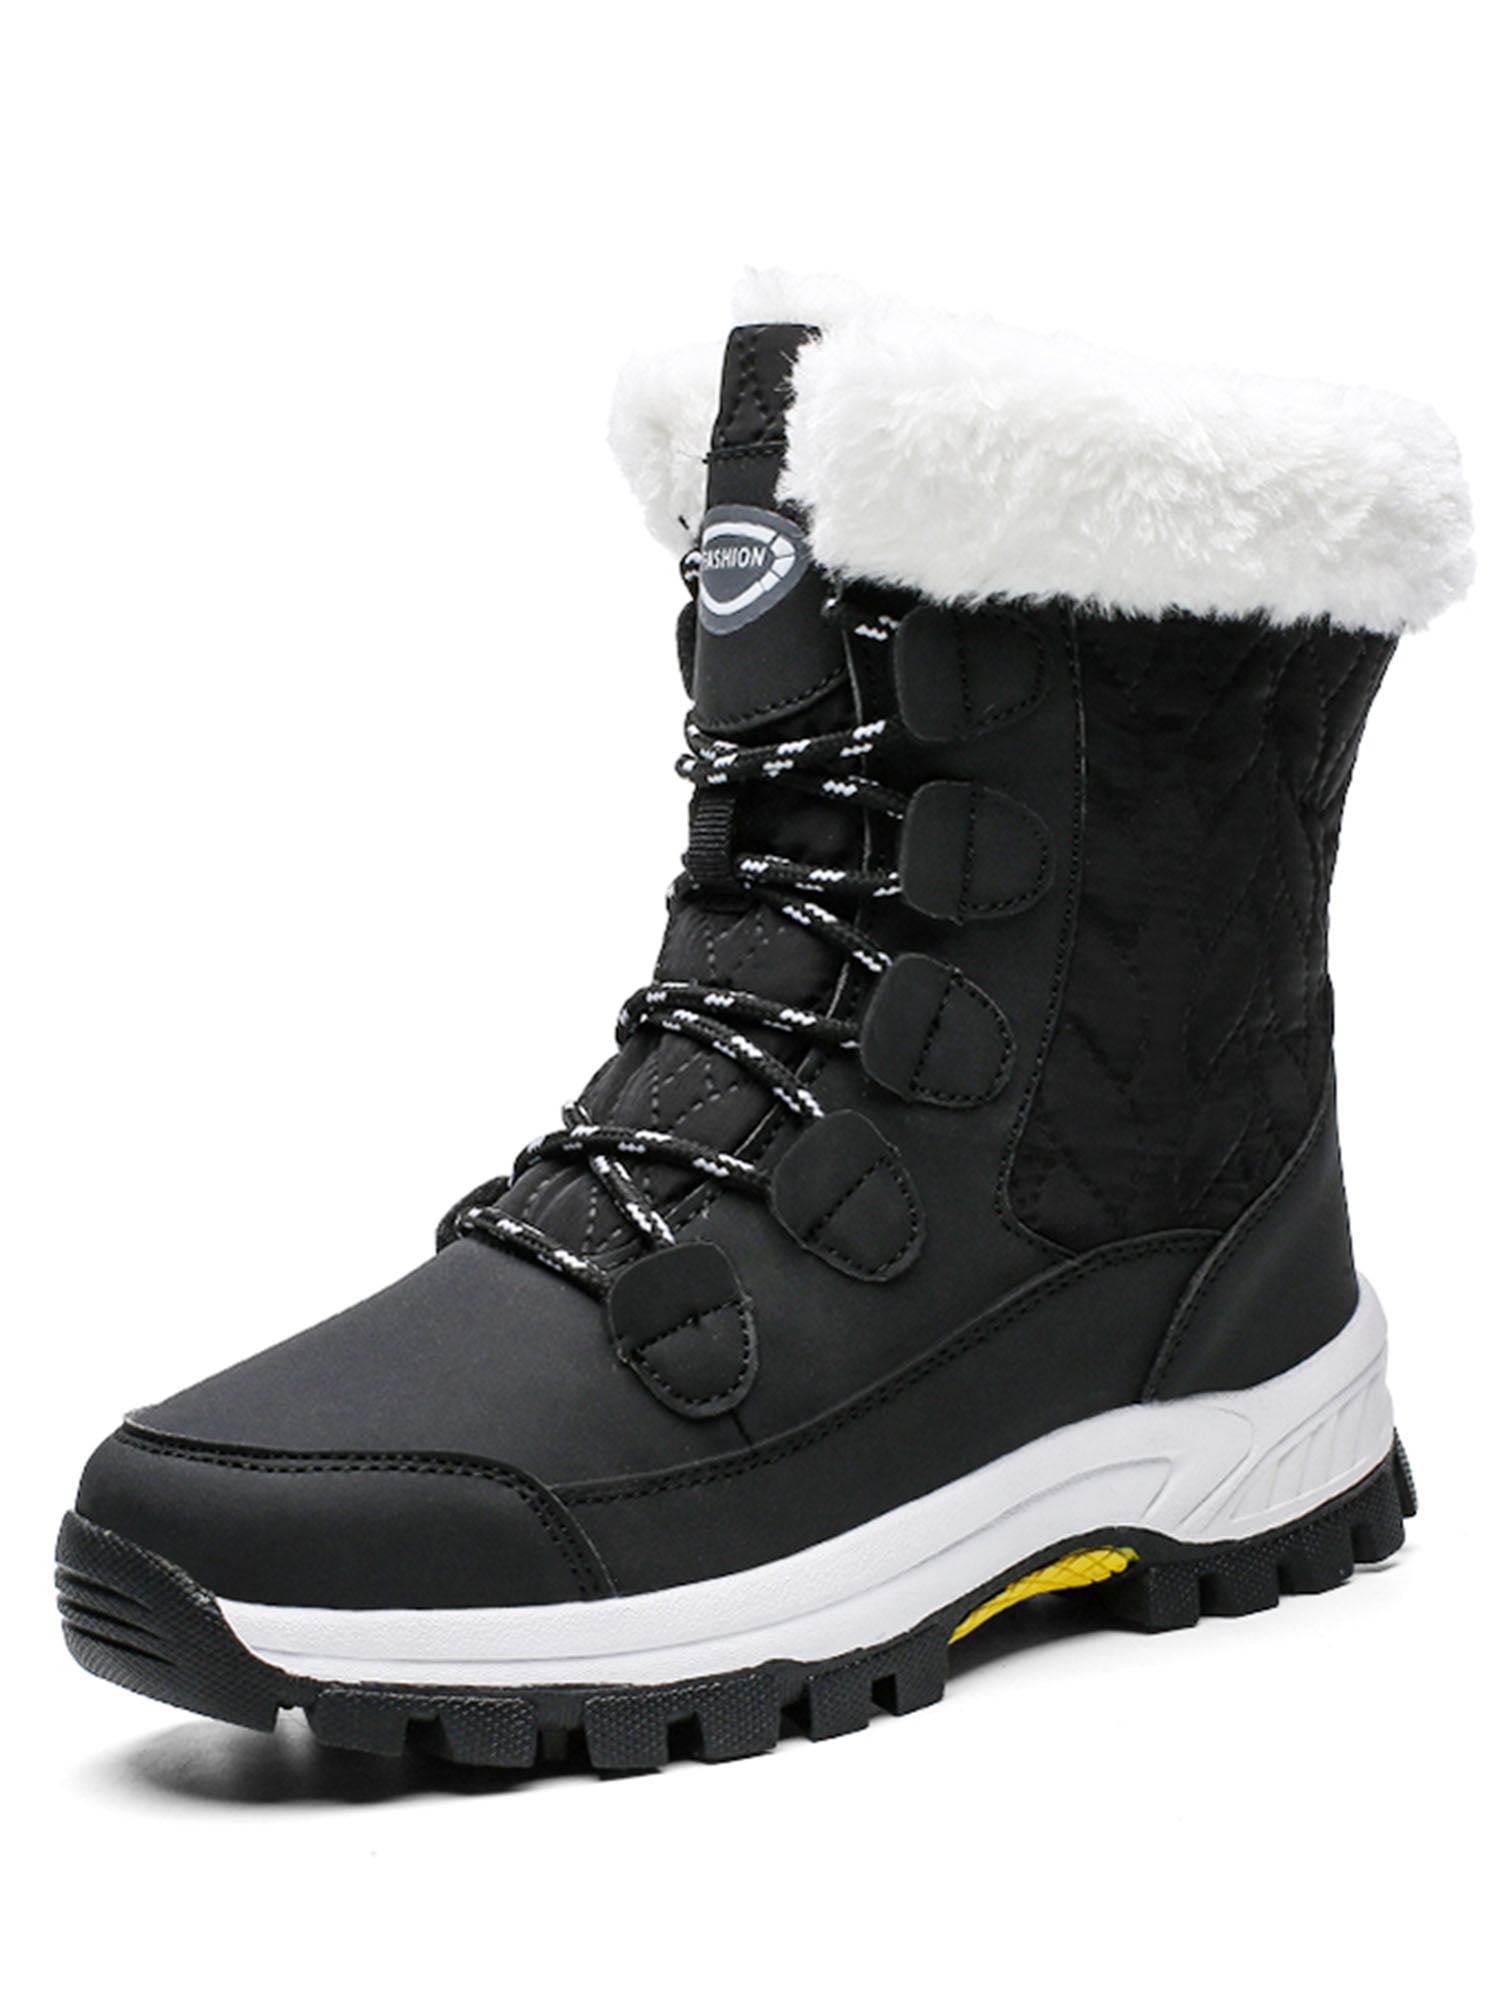 Women Winter Warm Shoes Waterproof Comfortable Mid Calf Outdoor Snow Boots